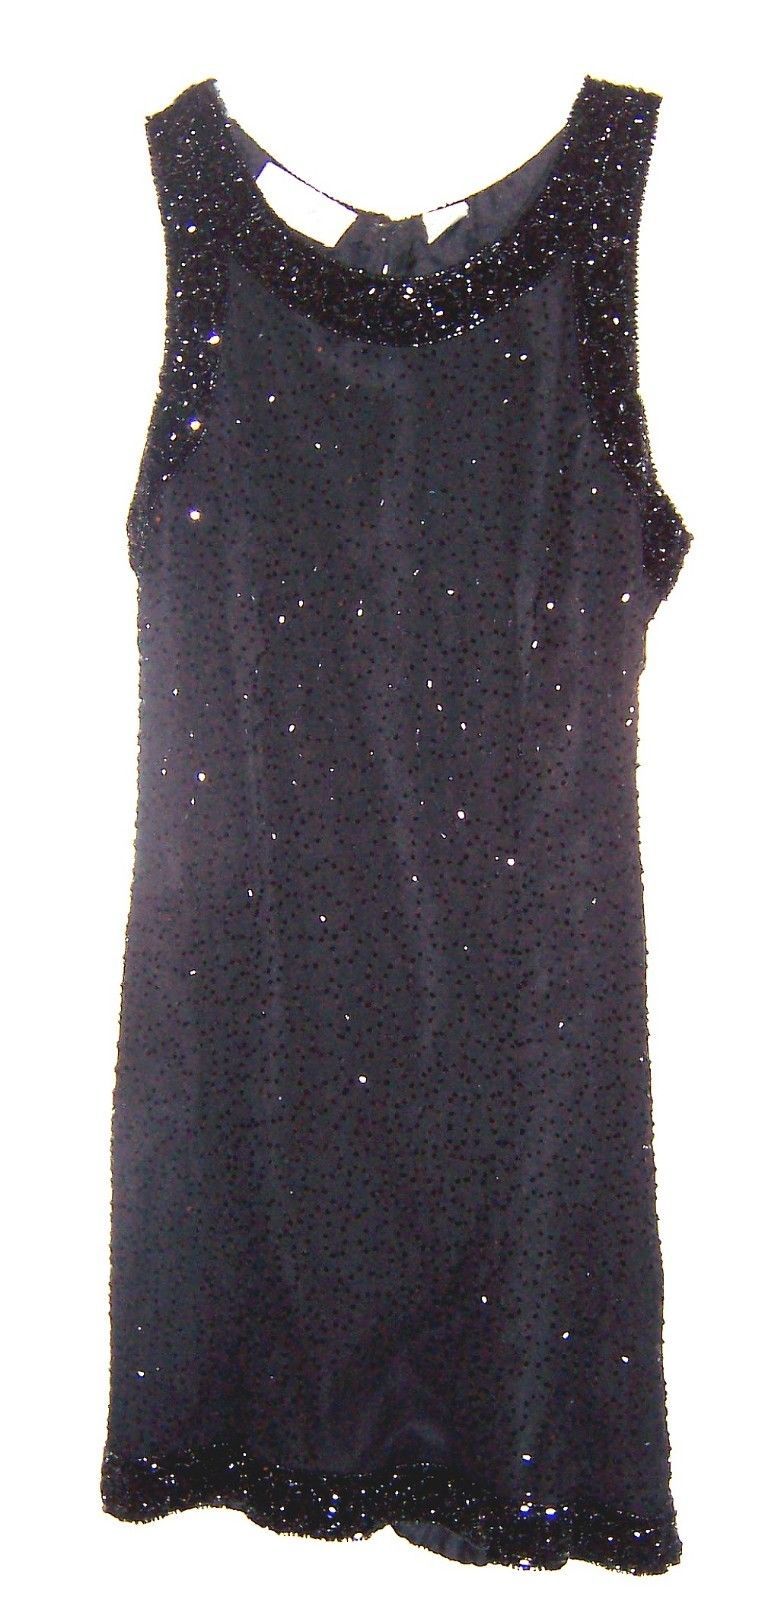 Primary image for Laurence Kazar Black Beaded 100% Silk Petite Dress Size XXS XS PS